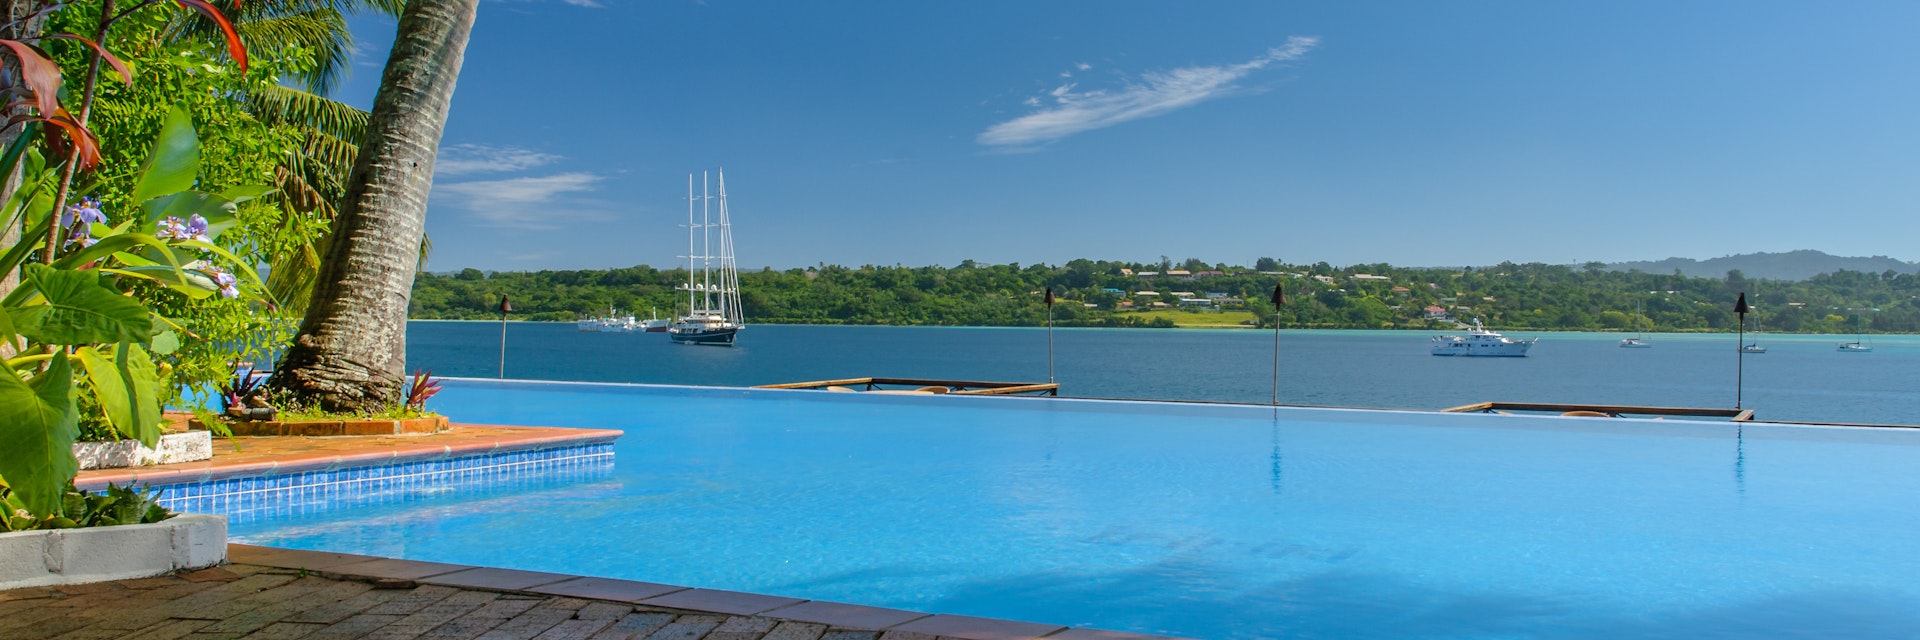 500px Photo ID: 125204697 - View across resort pool to harbour, Iririki Island Resort, Port Vila, Vanuatu.